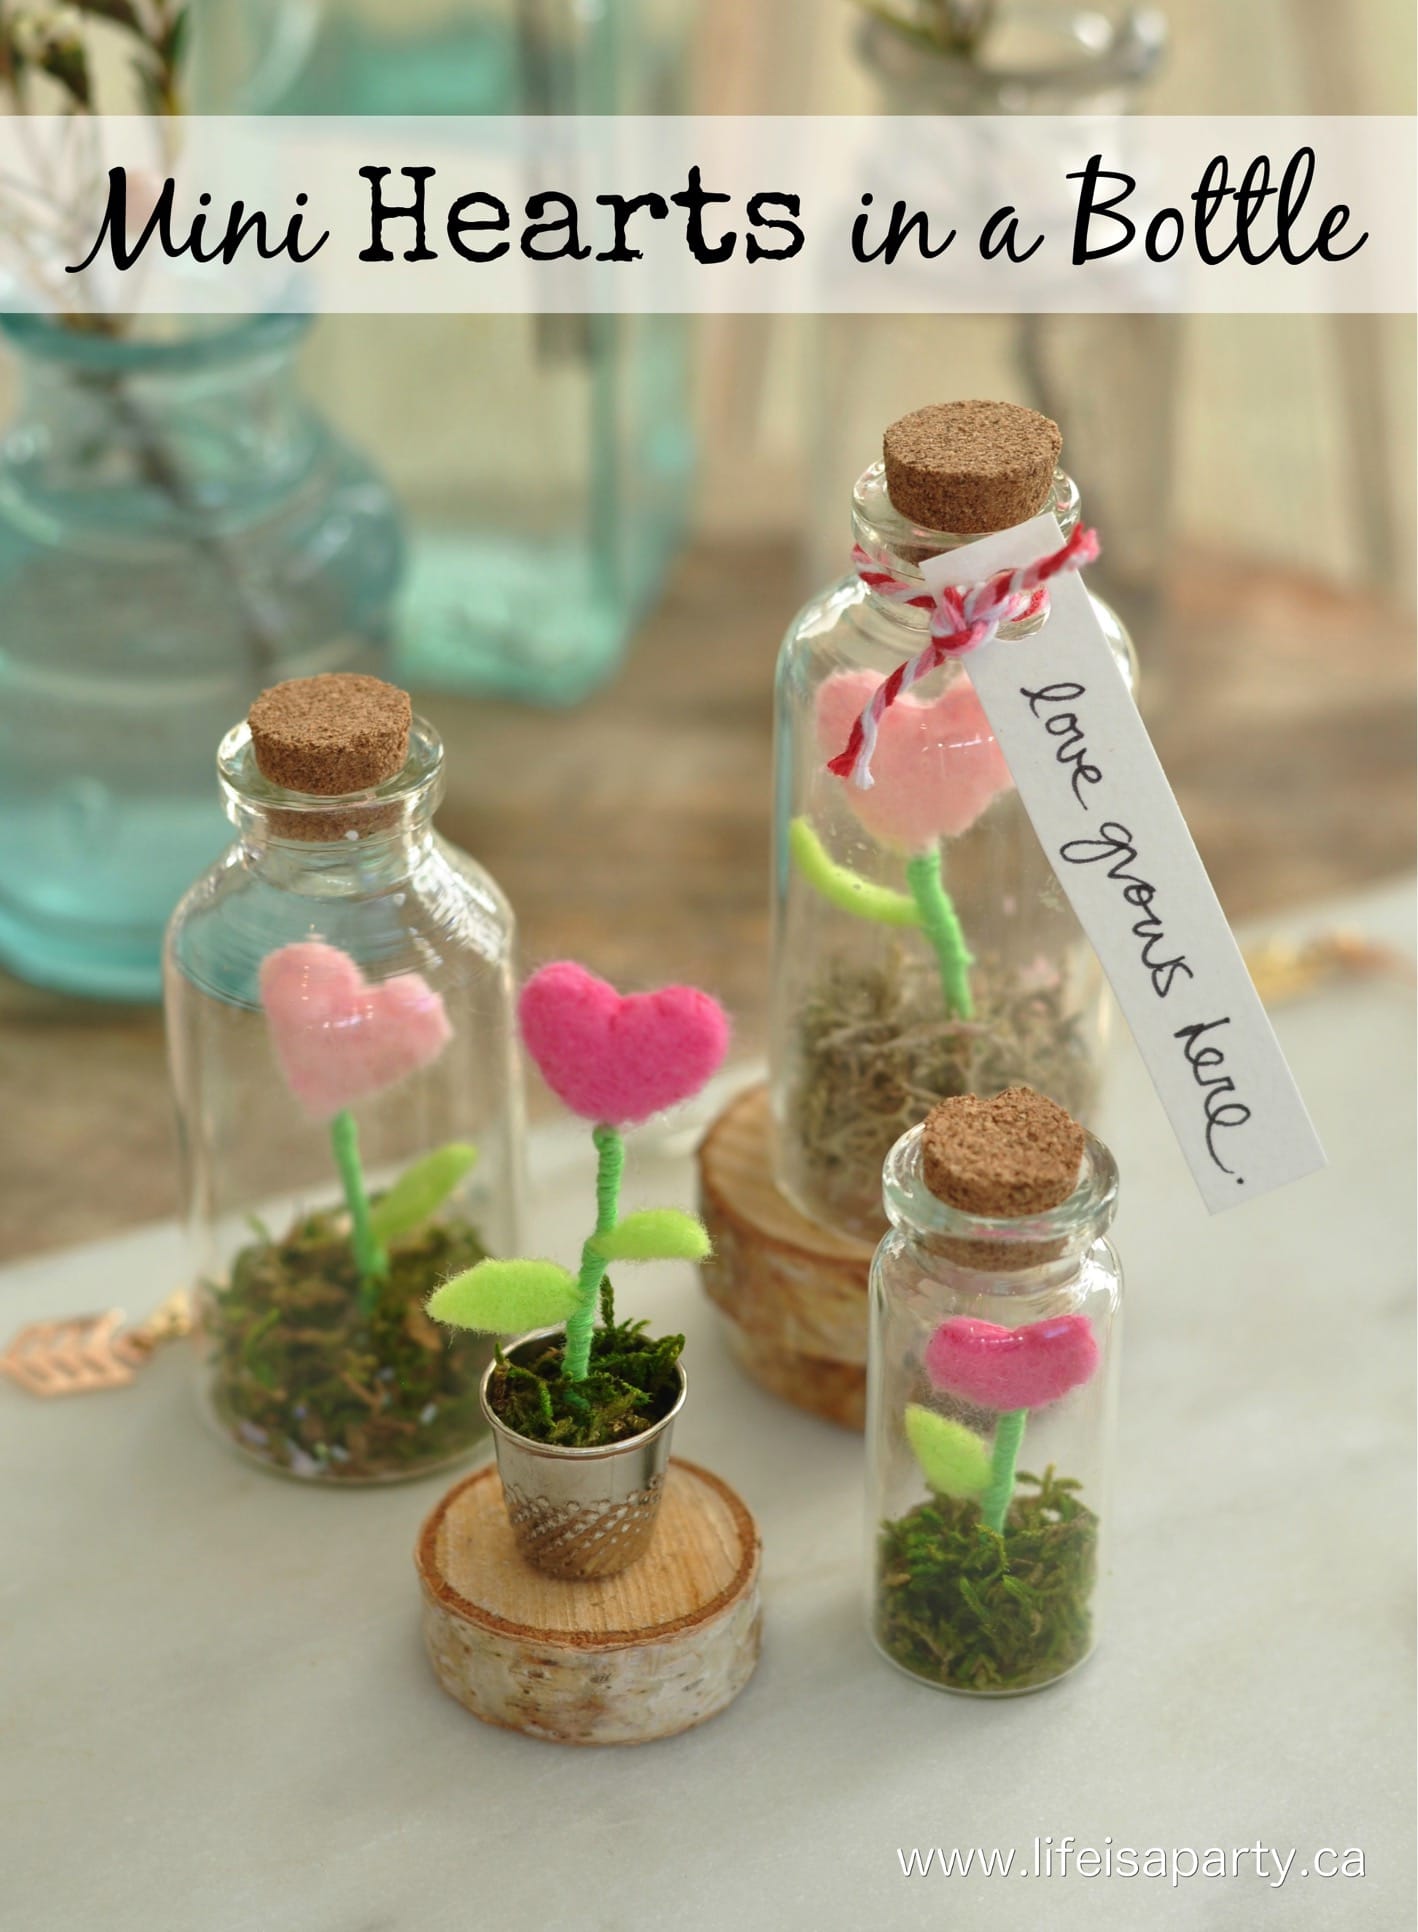 Mini Hearts in a Bottle Miniature Terrarium: Tiny felt heart flowers inside a glass jar create a magical terrarium garden.